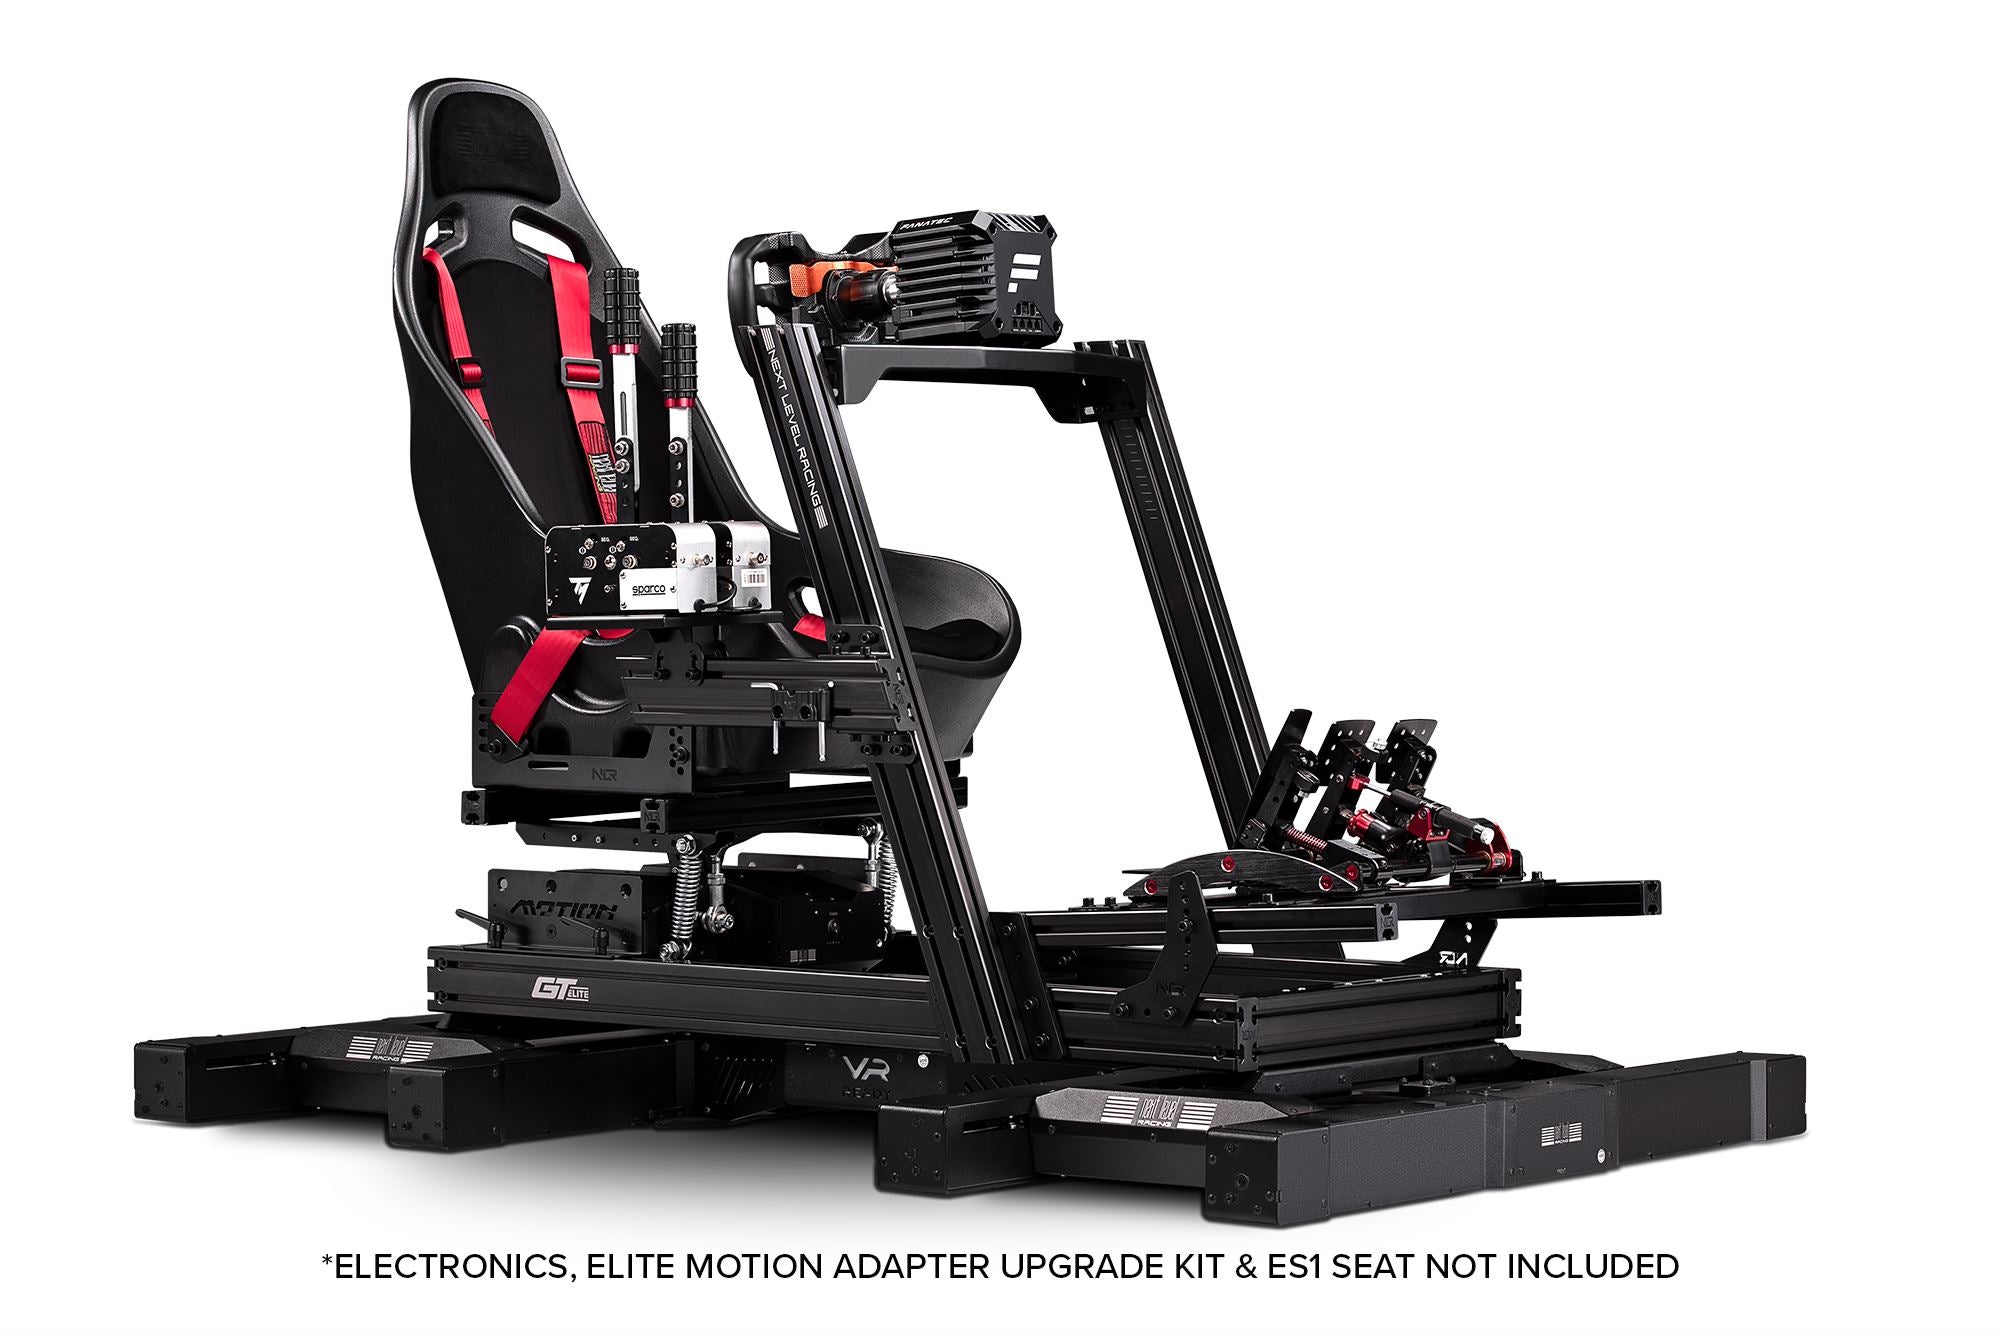 Next Level Racing GTElite Racing Simulator Cockpit- Wheel Plate Edition